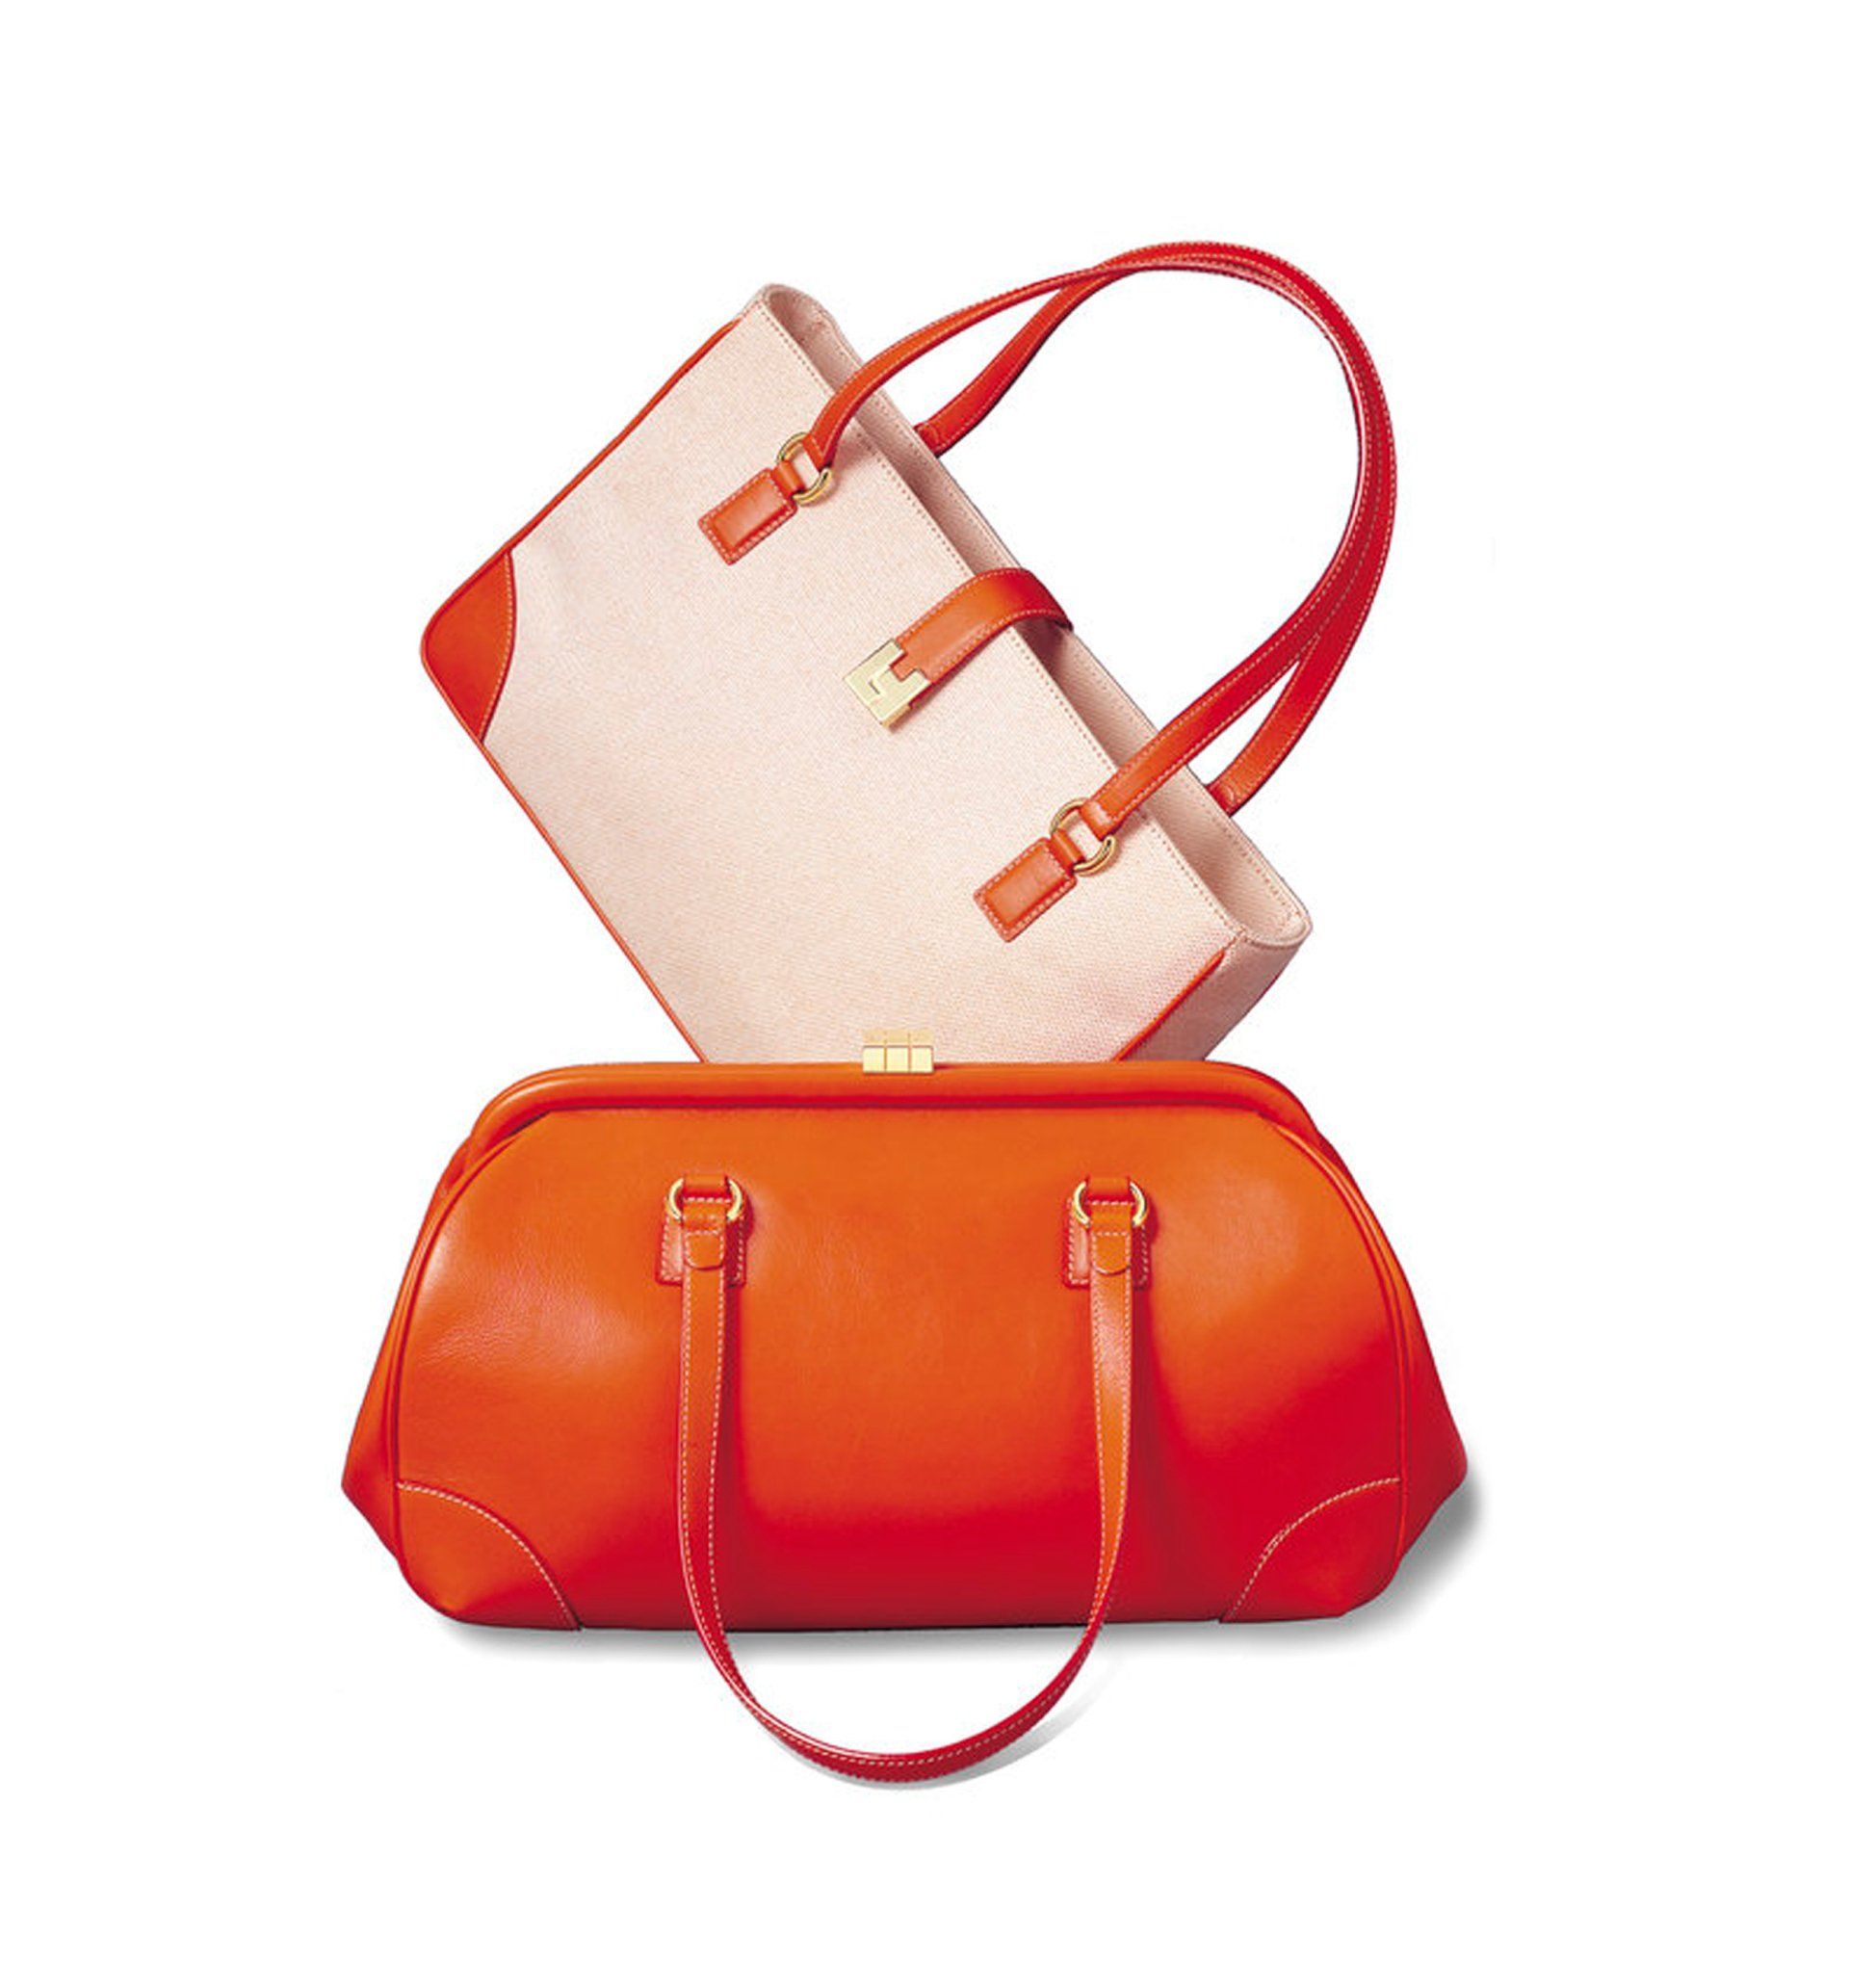 ebay product photogrpahy of a handbag or purse